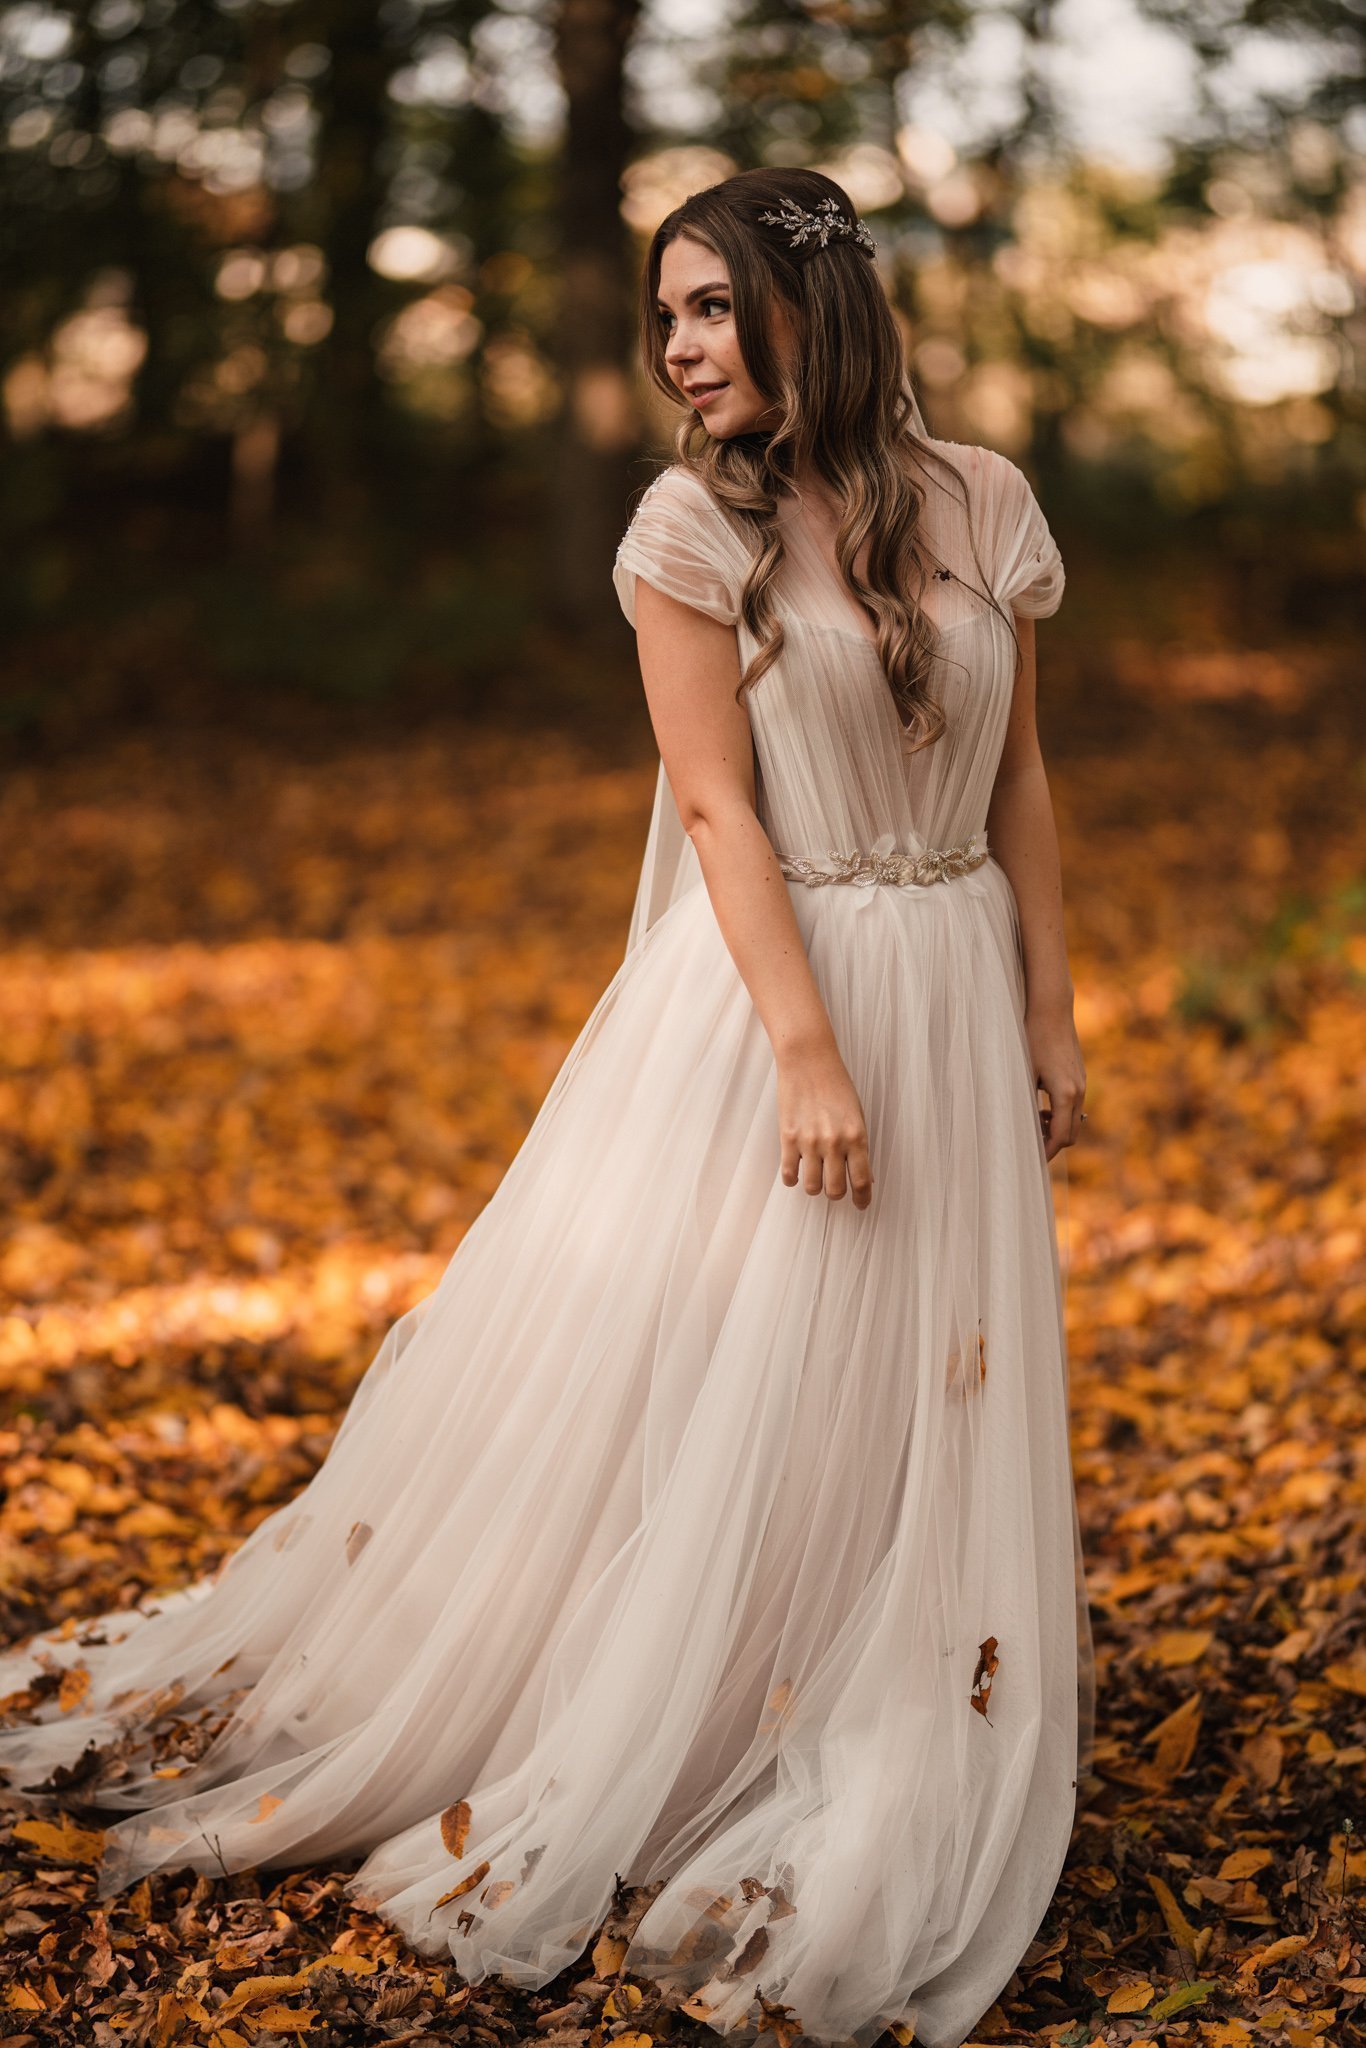 wedding photographer at greenspot wedding barn - bride portrait in autumn